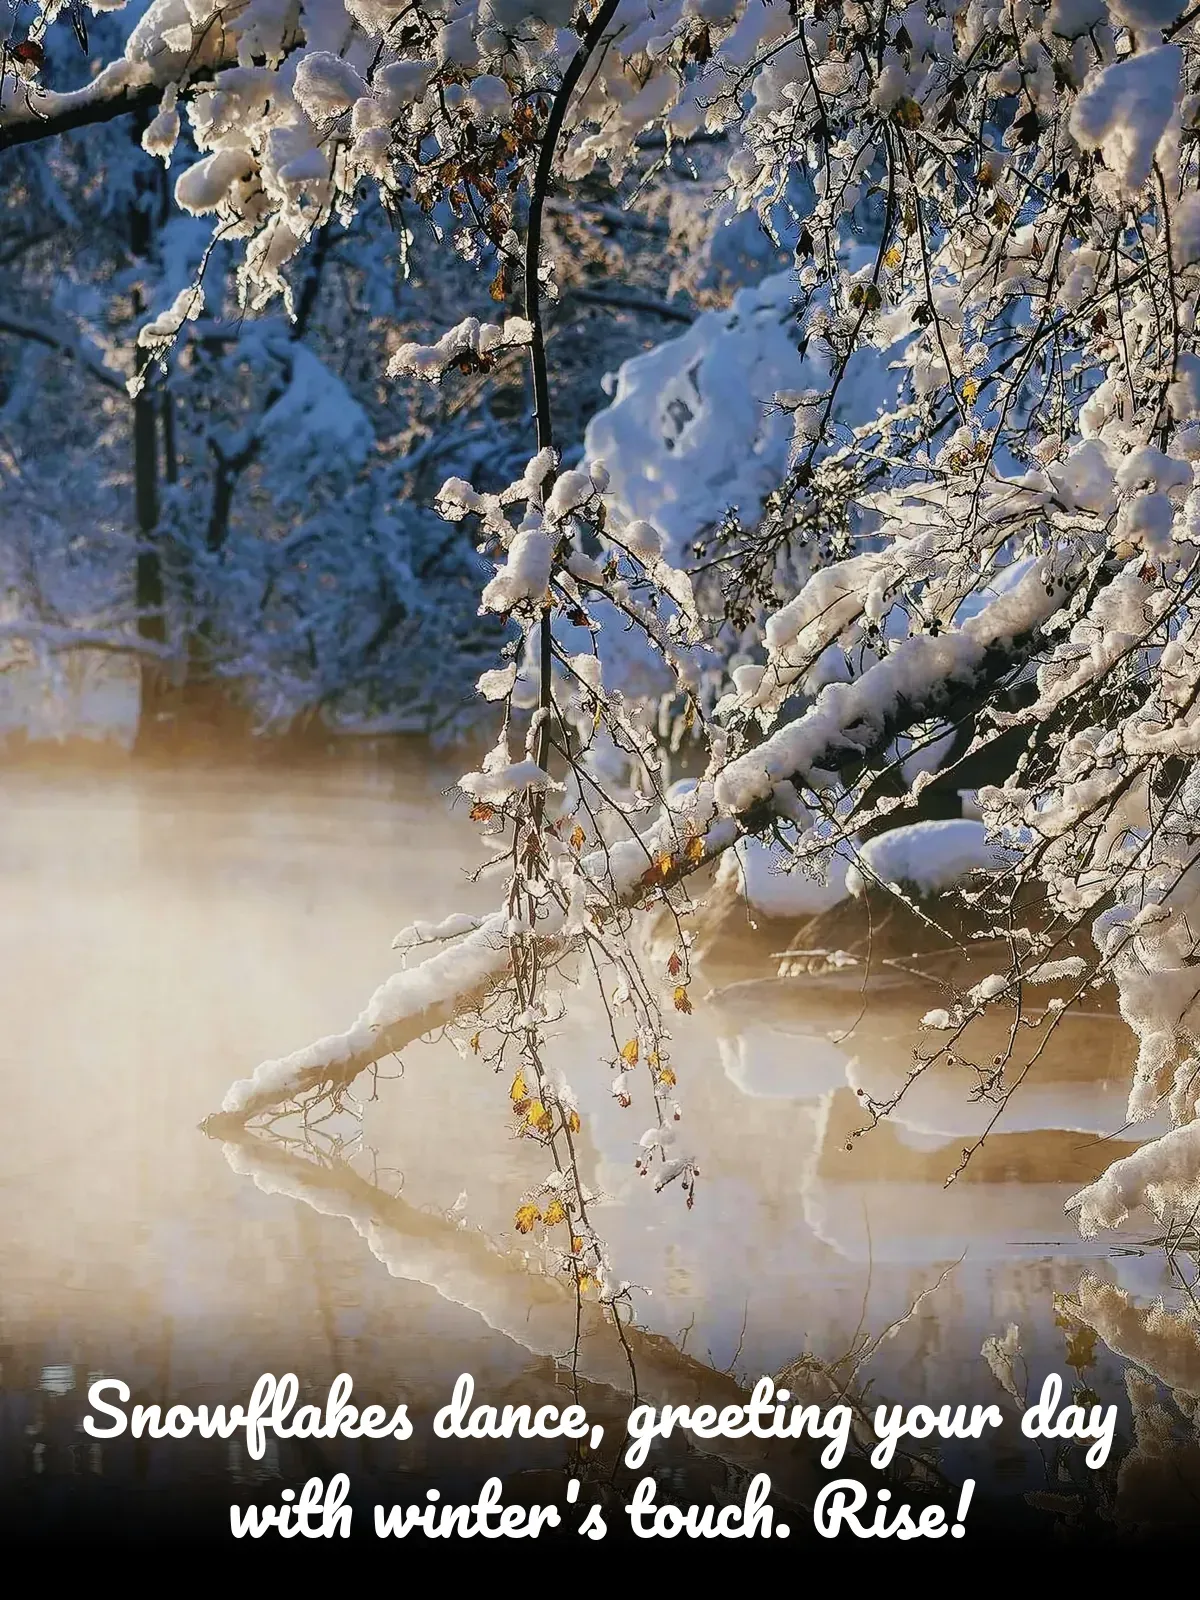 Winter wonderland: A tree heavily laden with freshly fallen snow against a sunlit sky